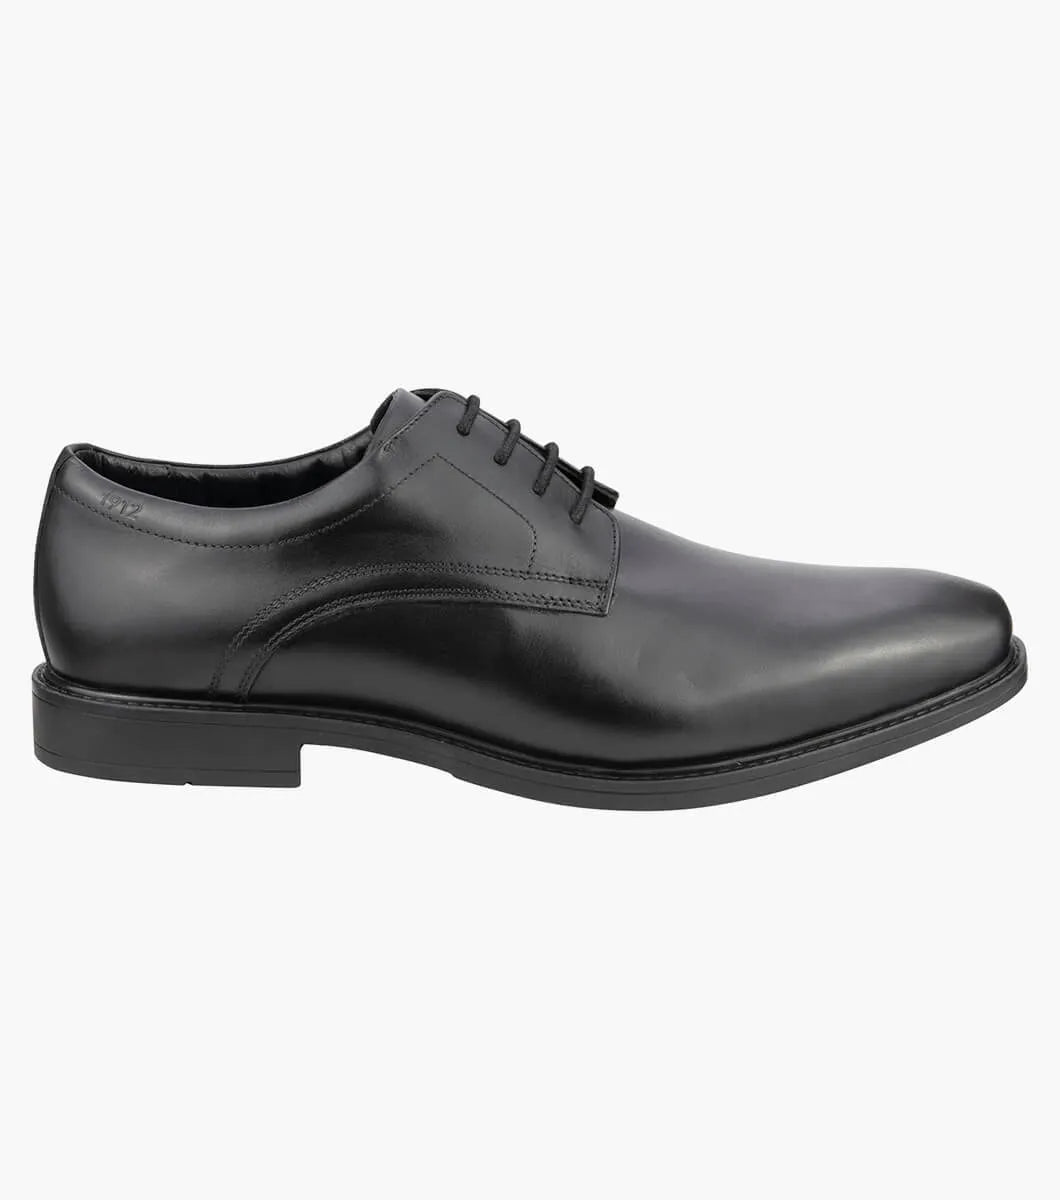 Florsheim Baxter Plain EEE Wide Fit Shoe - Black